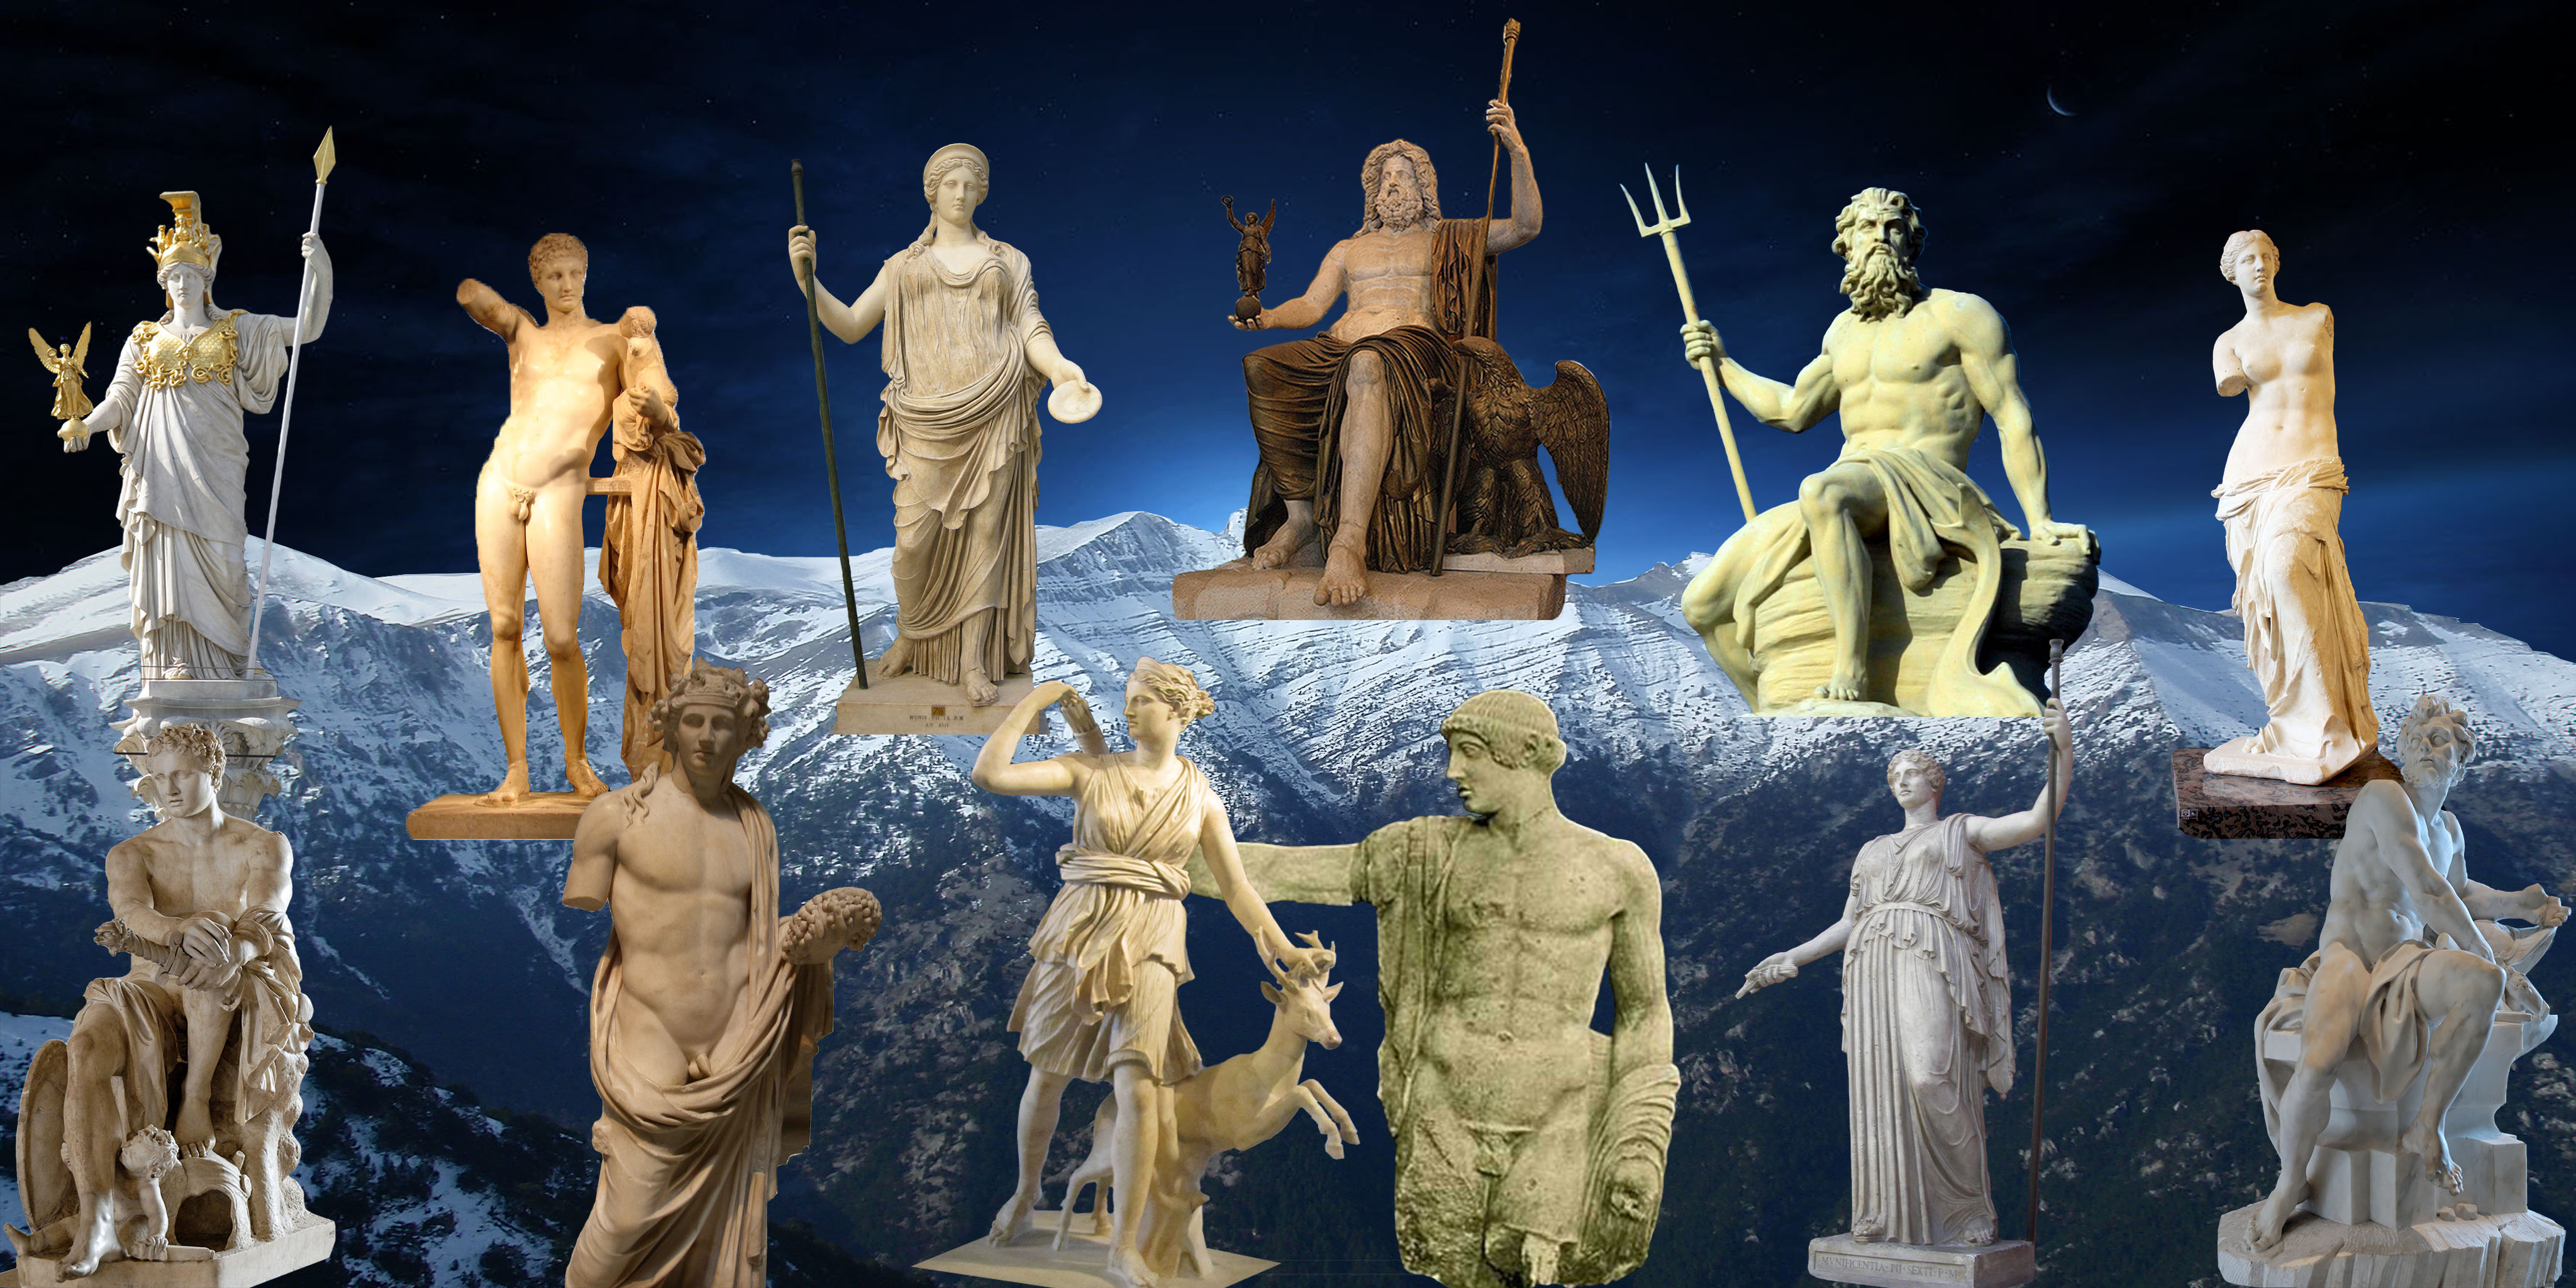 Боги живут на олимпе. Боги древней Греции боги Олимпа. Олимп, Пантеон древняя Греция боги. Олимп Греция боги статуи. 12 Богов Олимпа древней Греции.